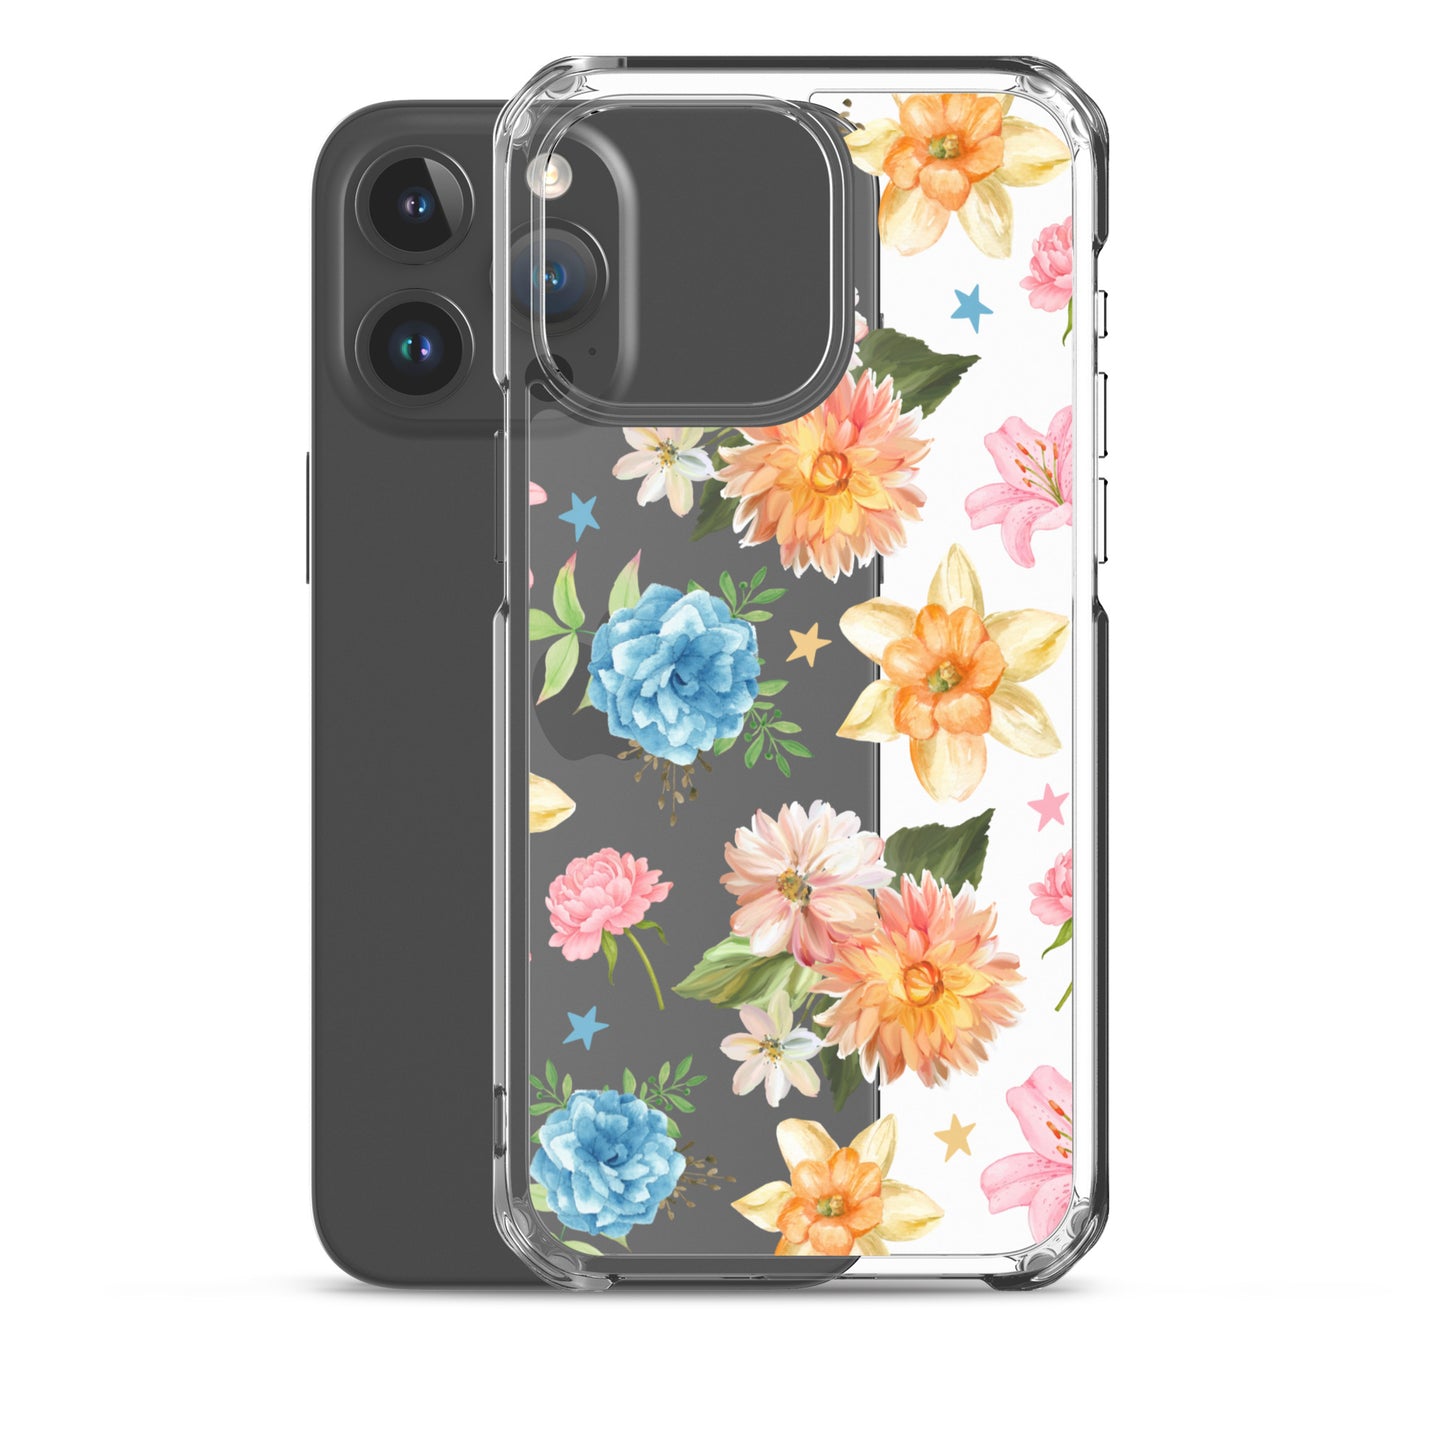 Floral Fiesta Clear iPhone Case